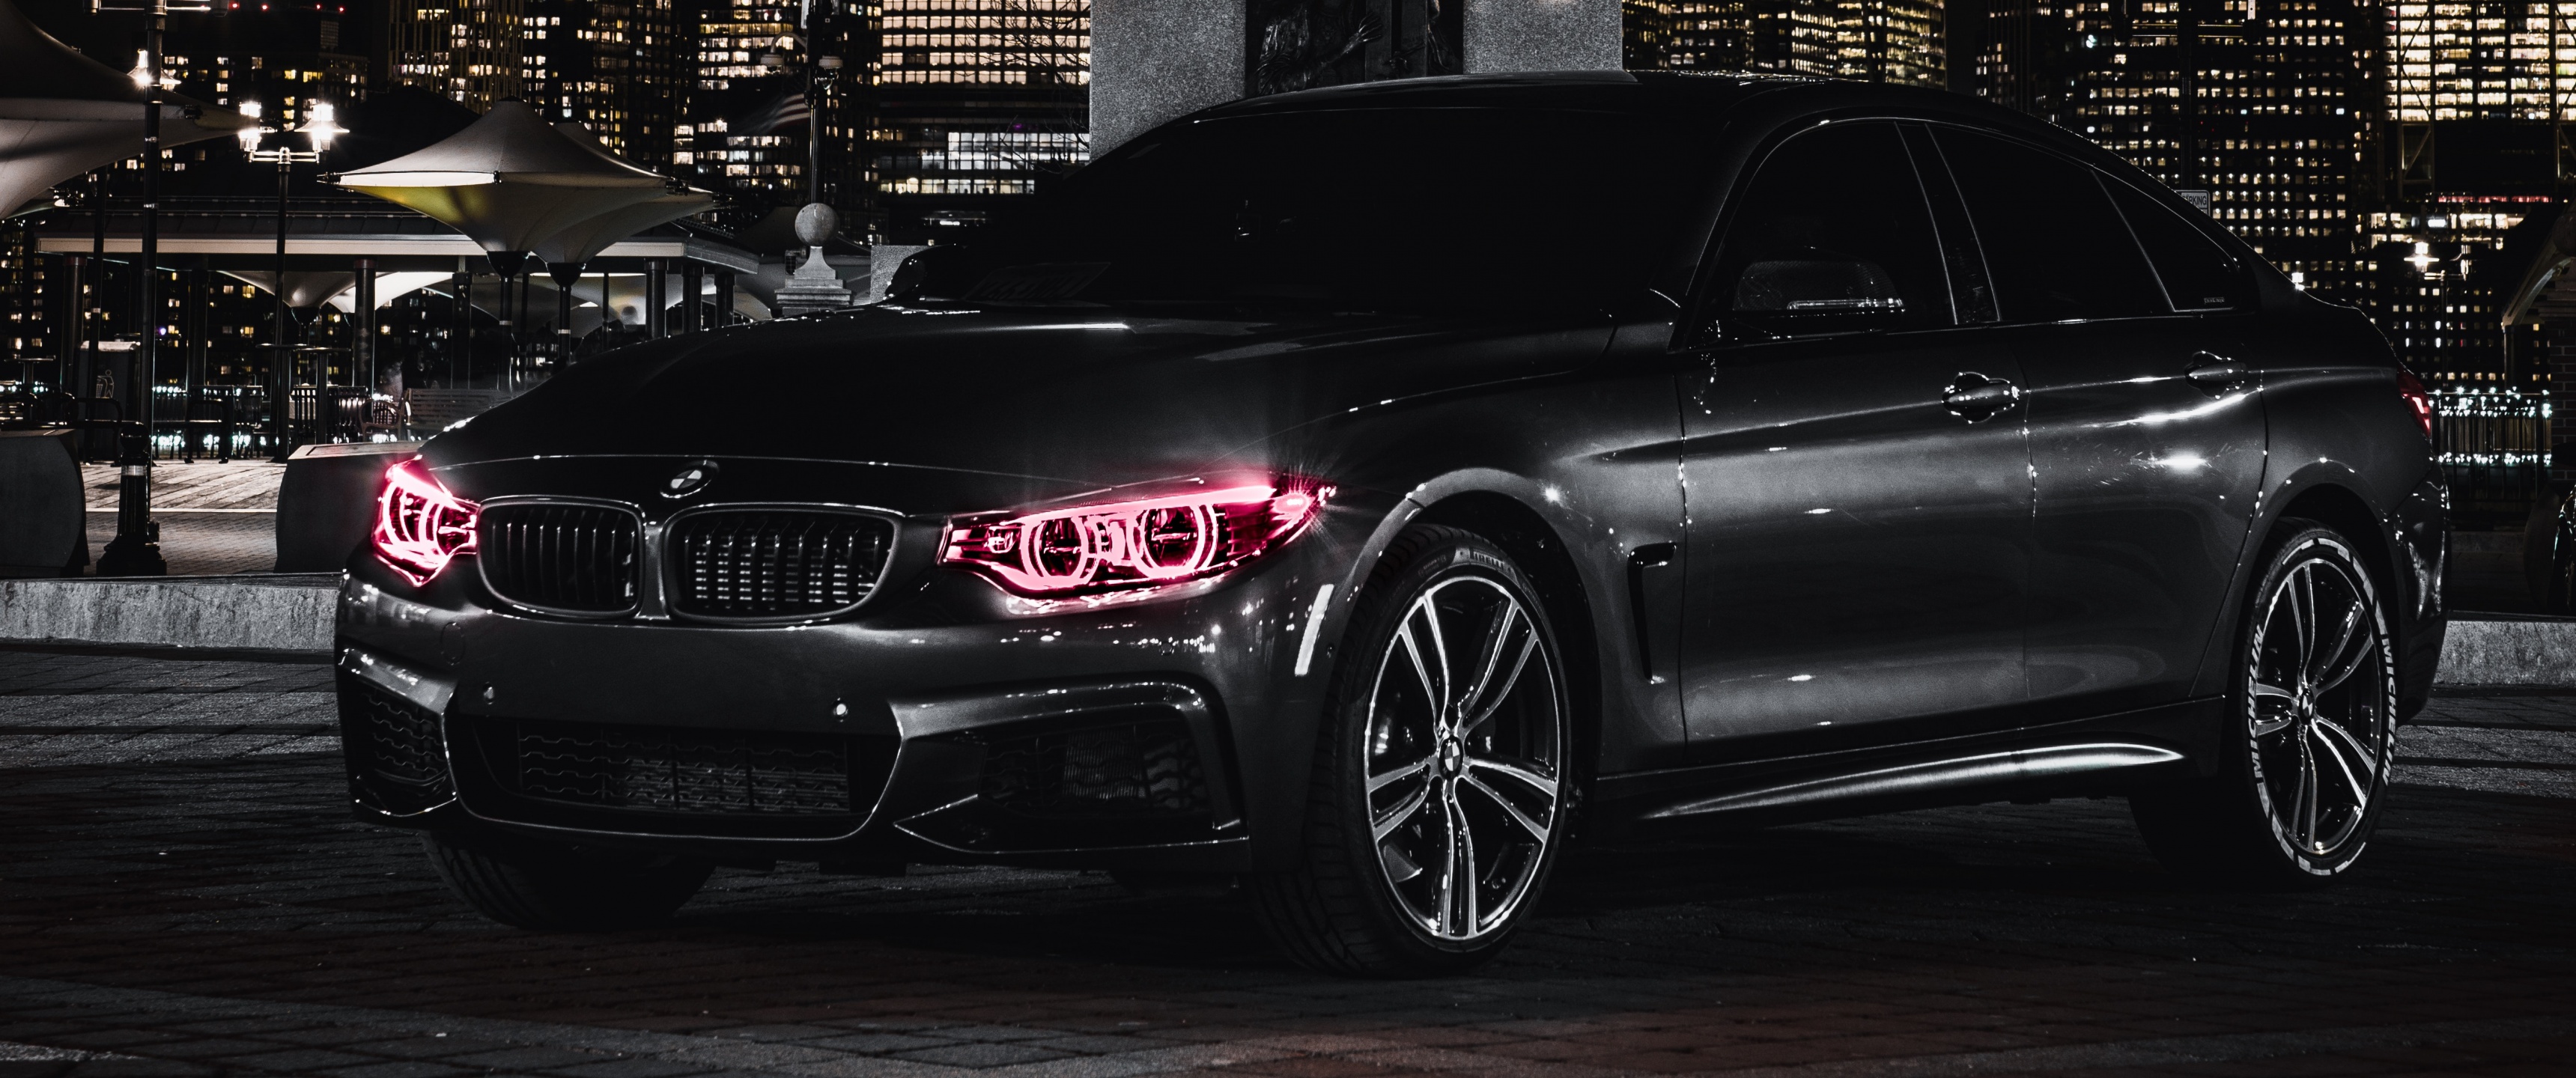 BMW M4 Wallpaper 4K, Black Edition, Angel Eyes, Night, City lights, Black/ Dark